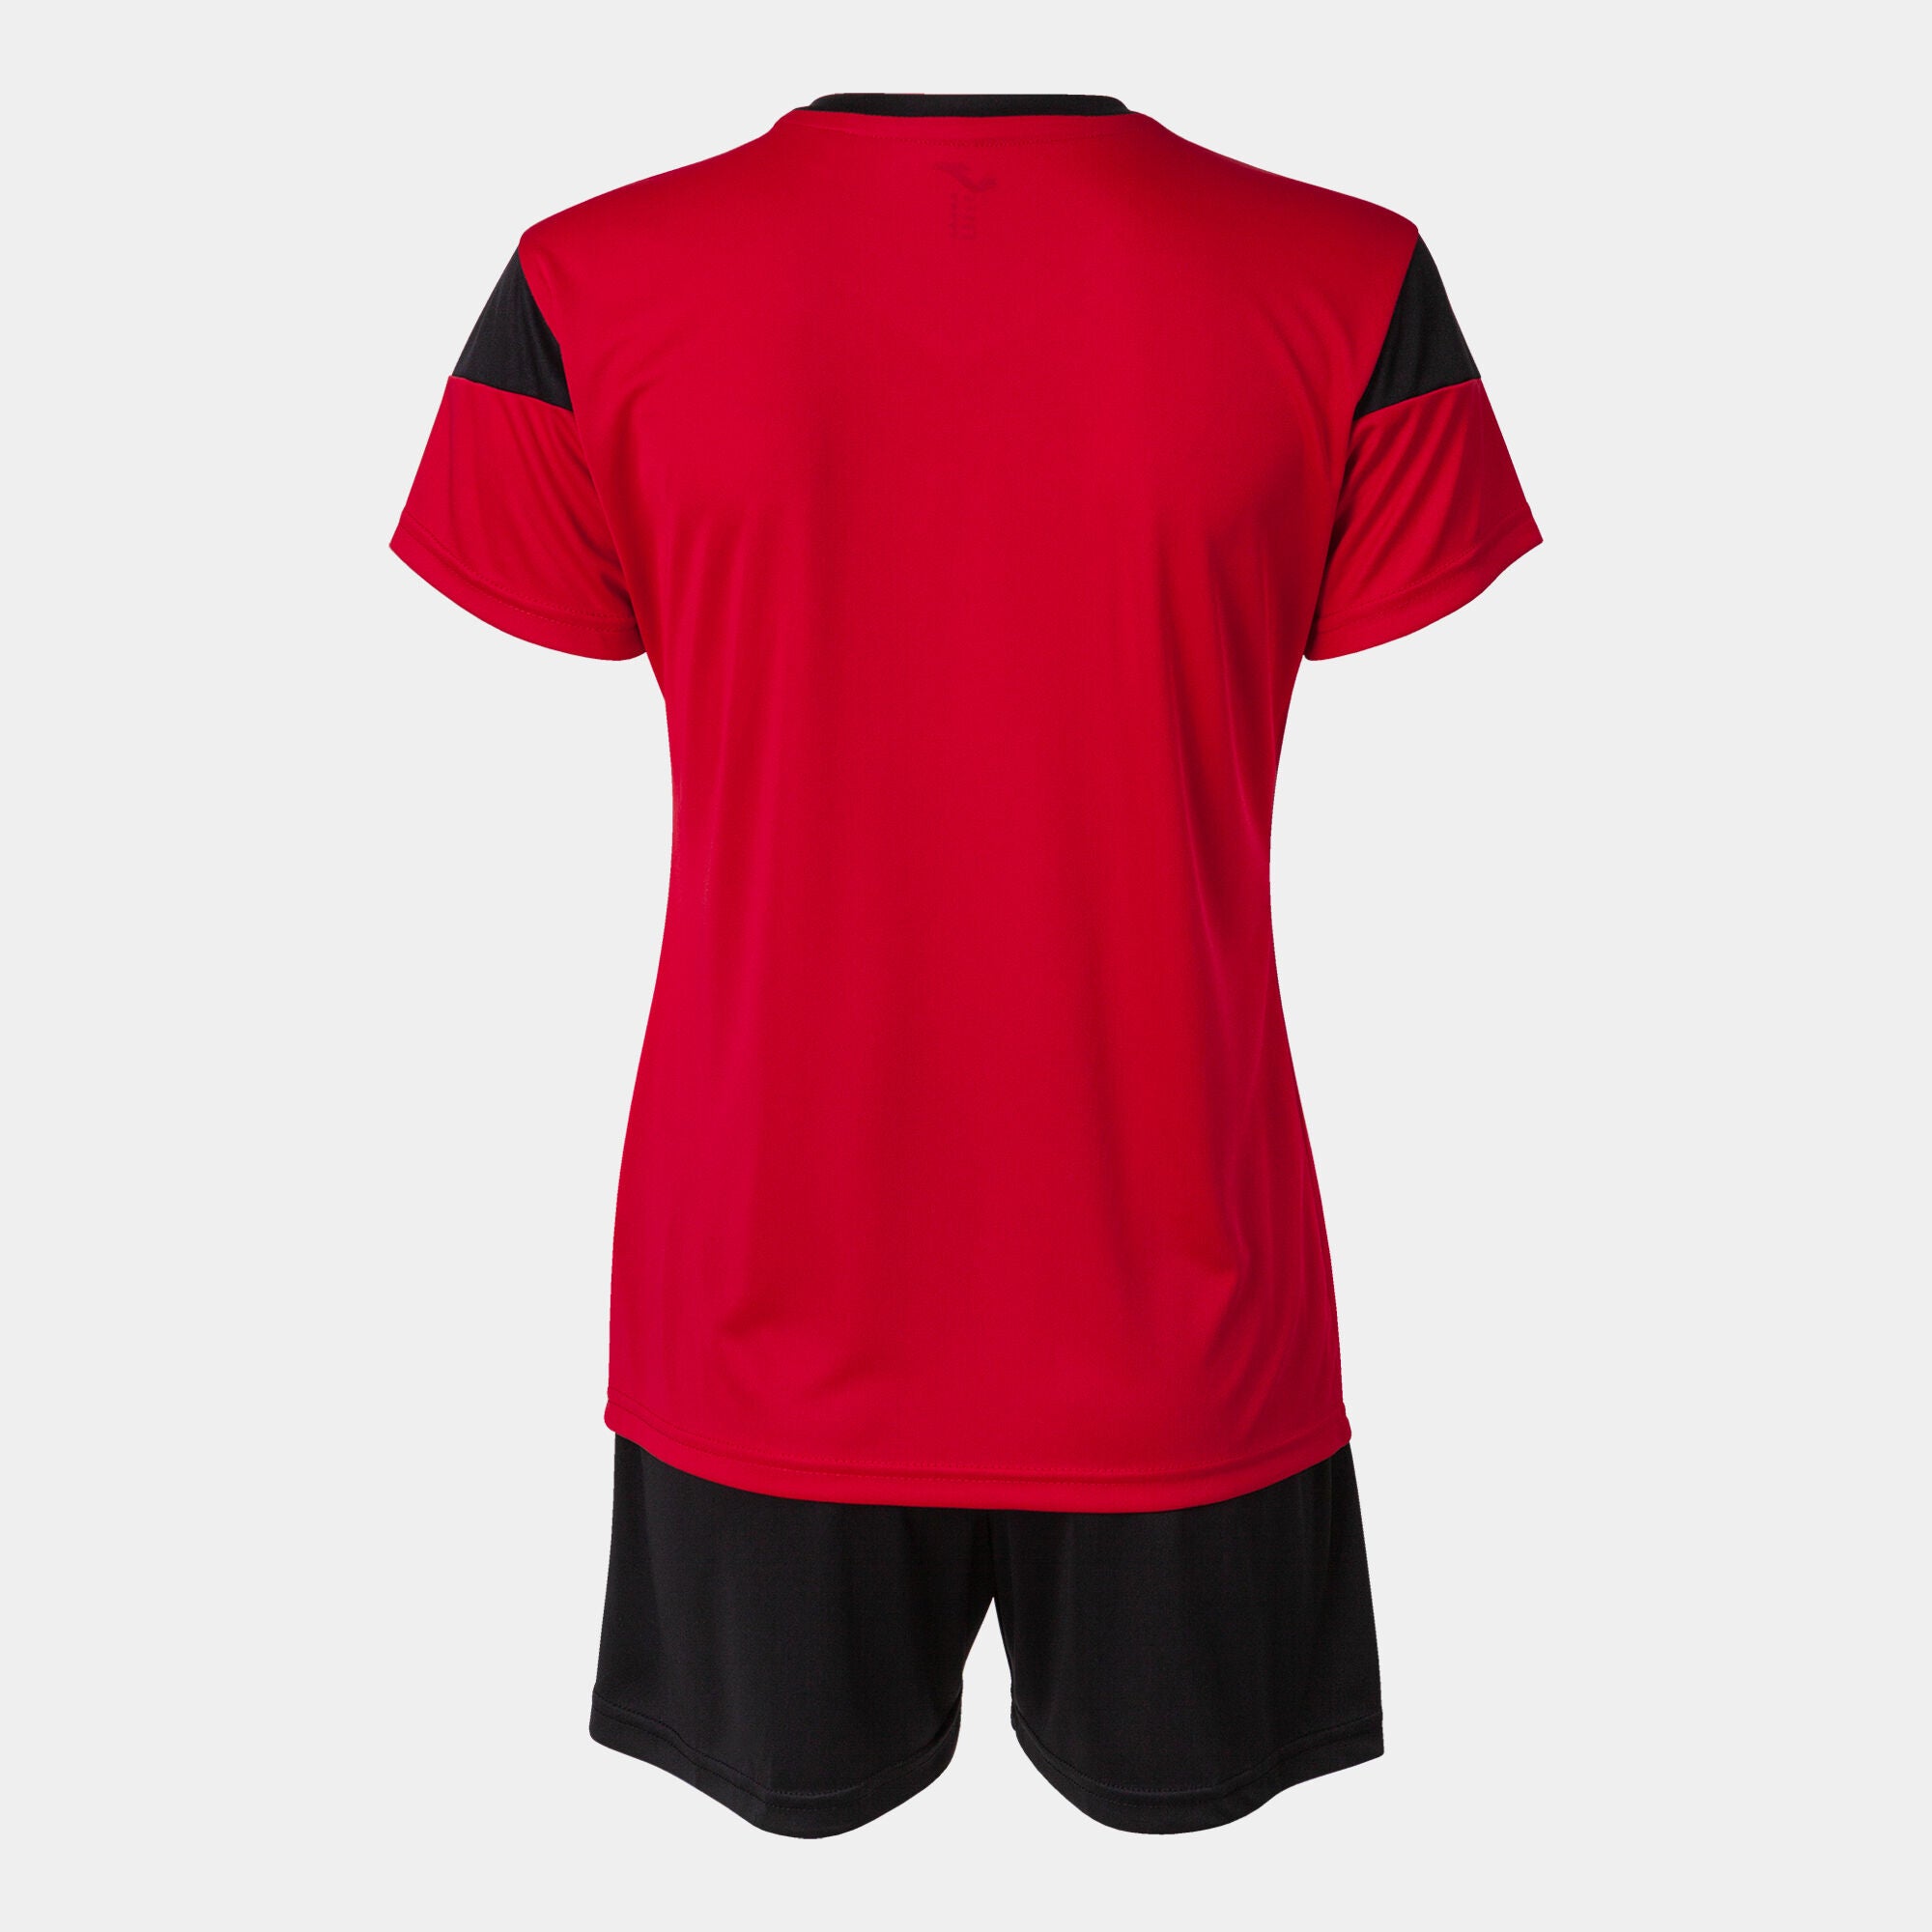 Joma Phoenix Activewear T-shirt & Short Set Ladies-2372 Red Black